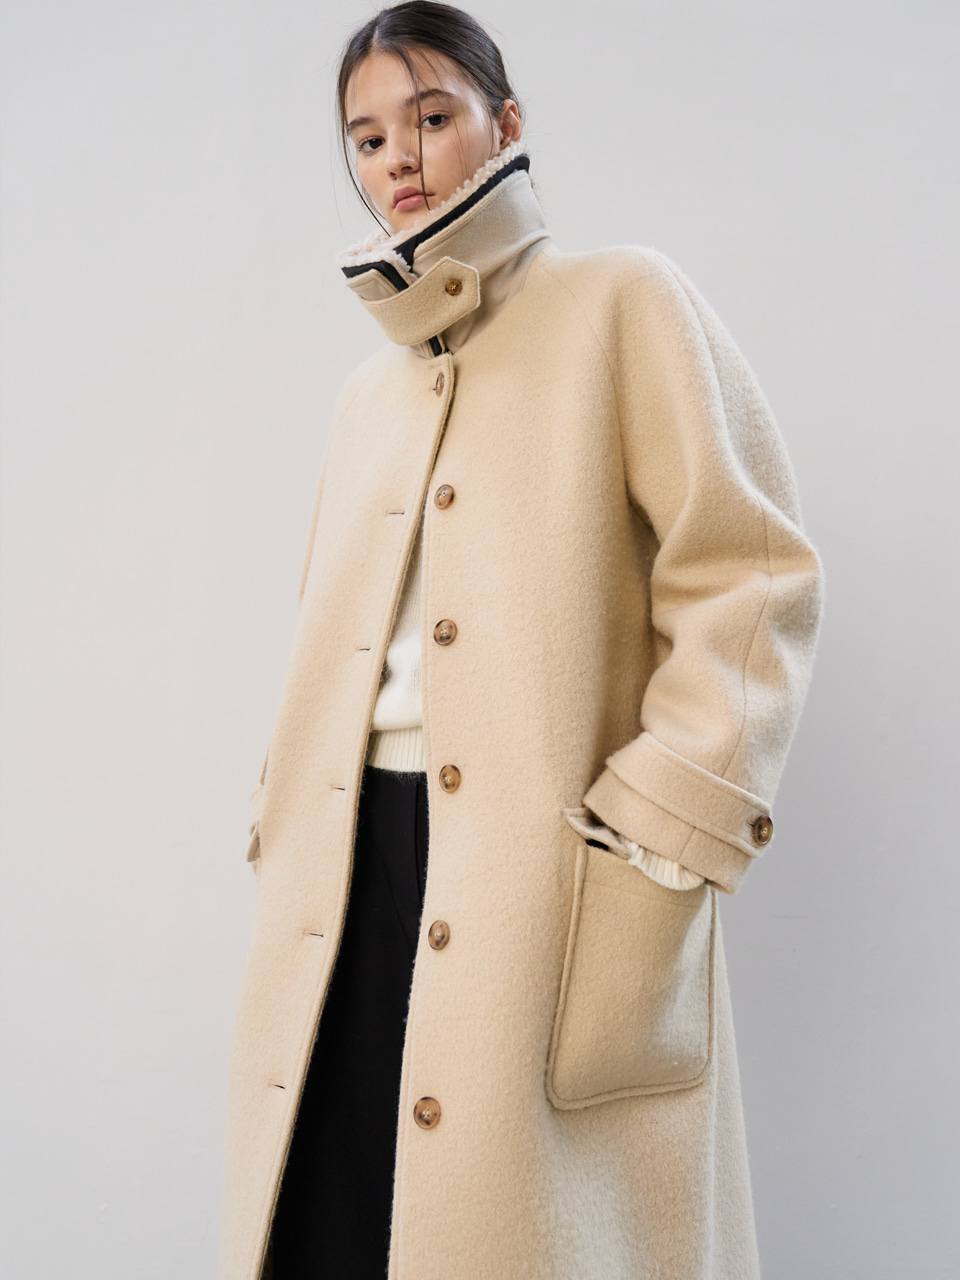 21&#039; Winter_Cream Belted Wool Coat [Ecru Shearling Collar]데일리 여성의류